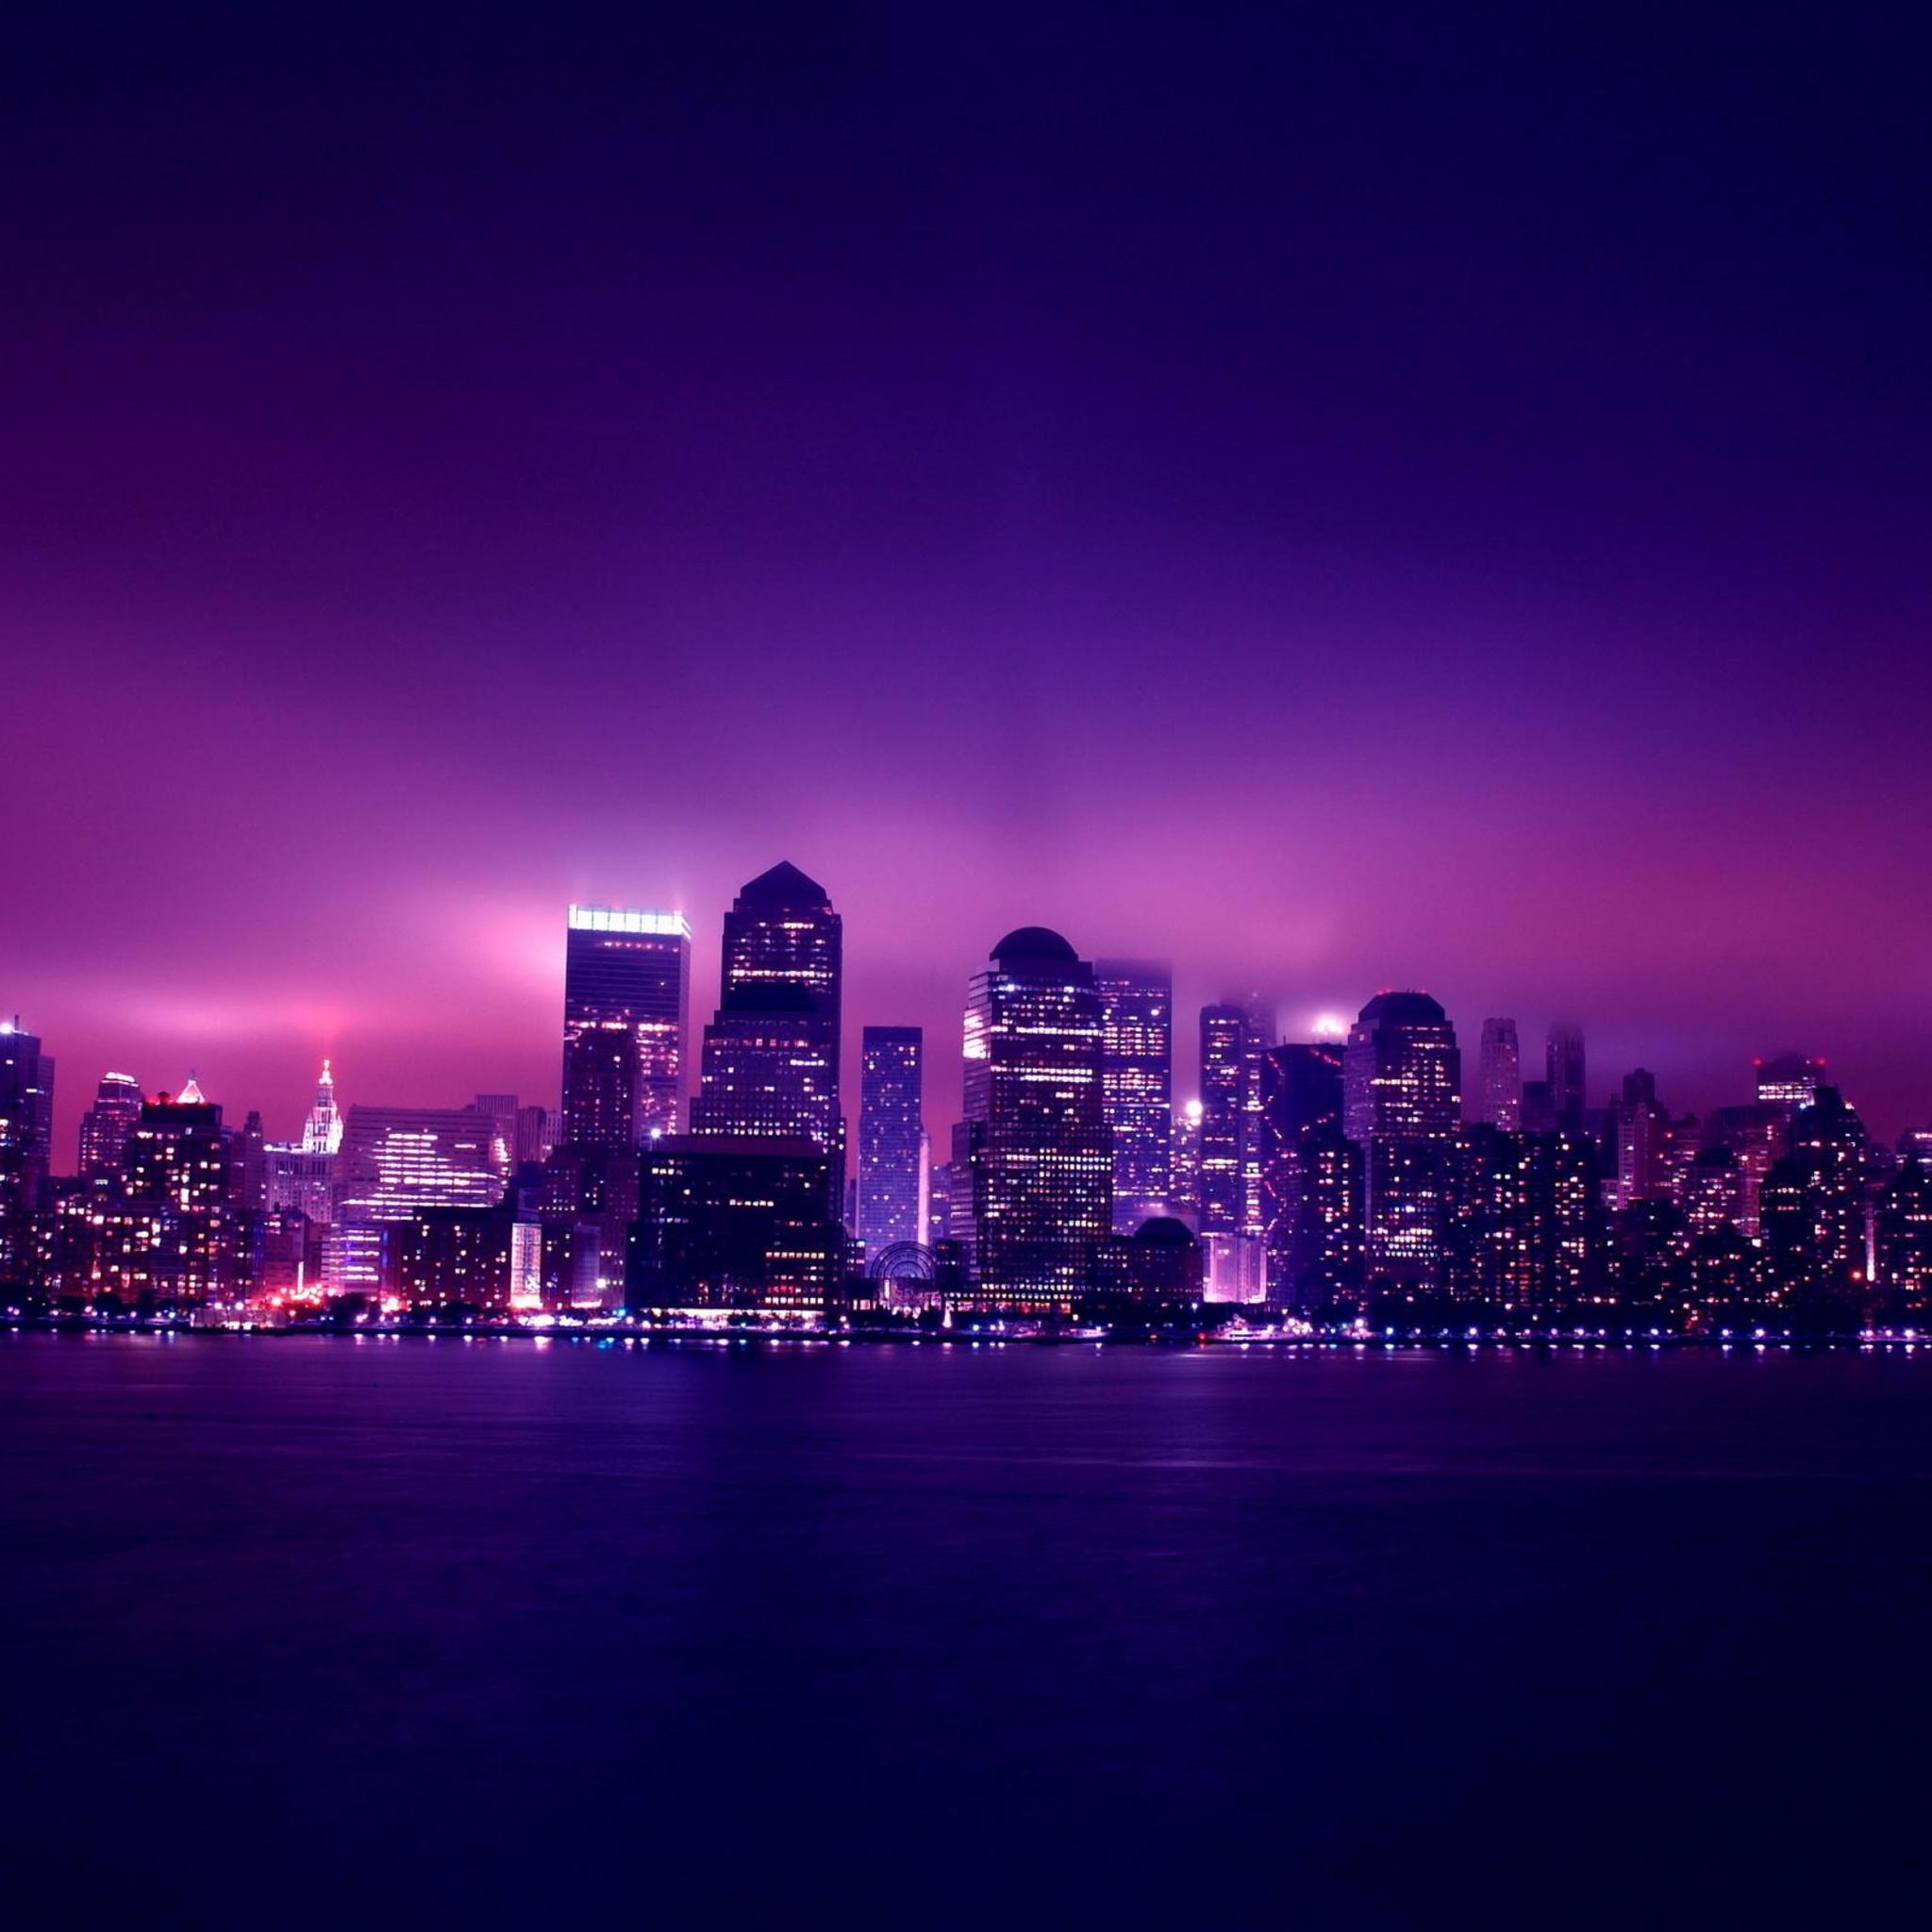 A city skyline at night with purple lighting - IPad